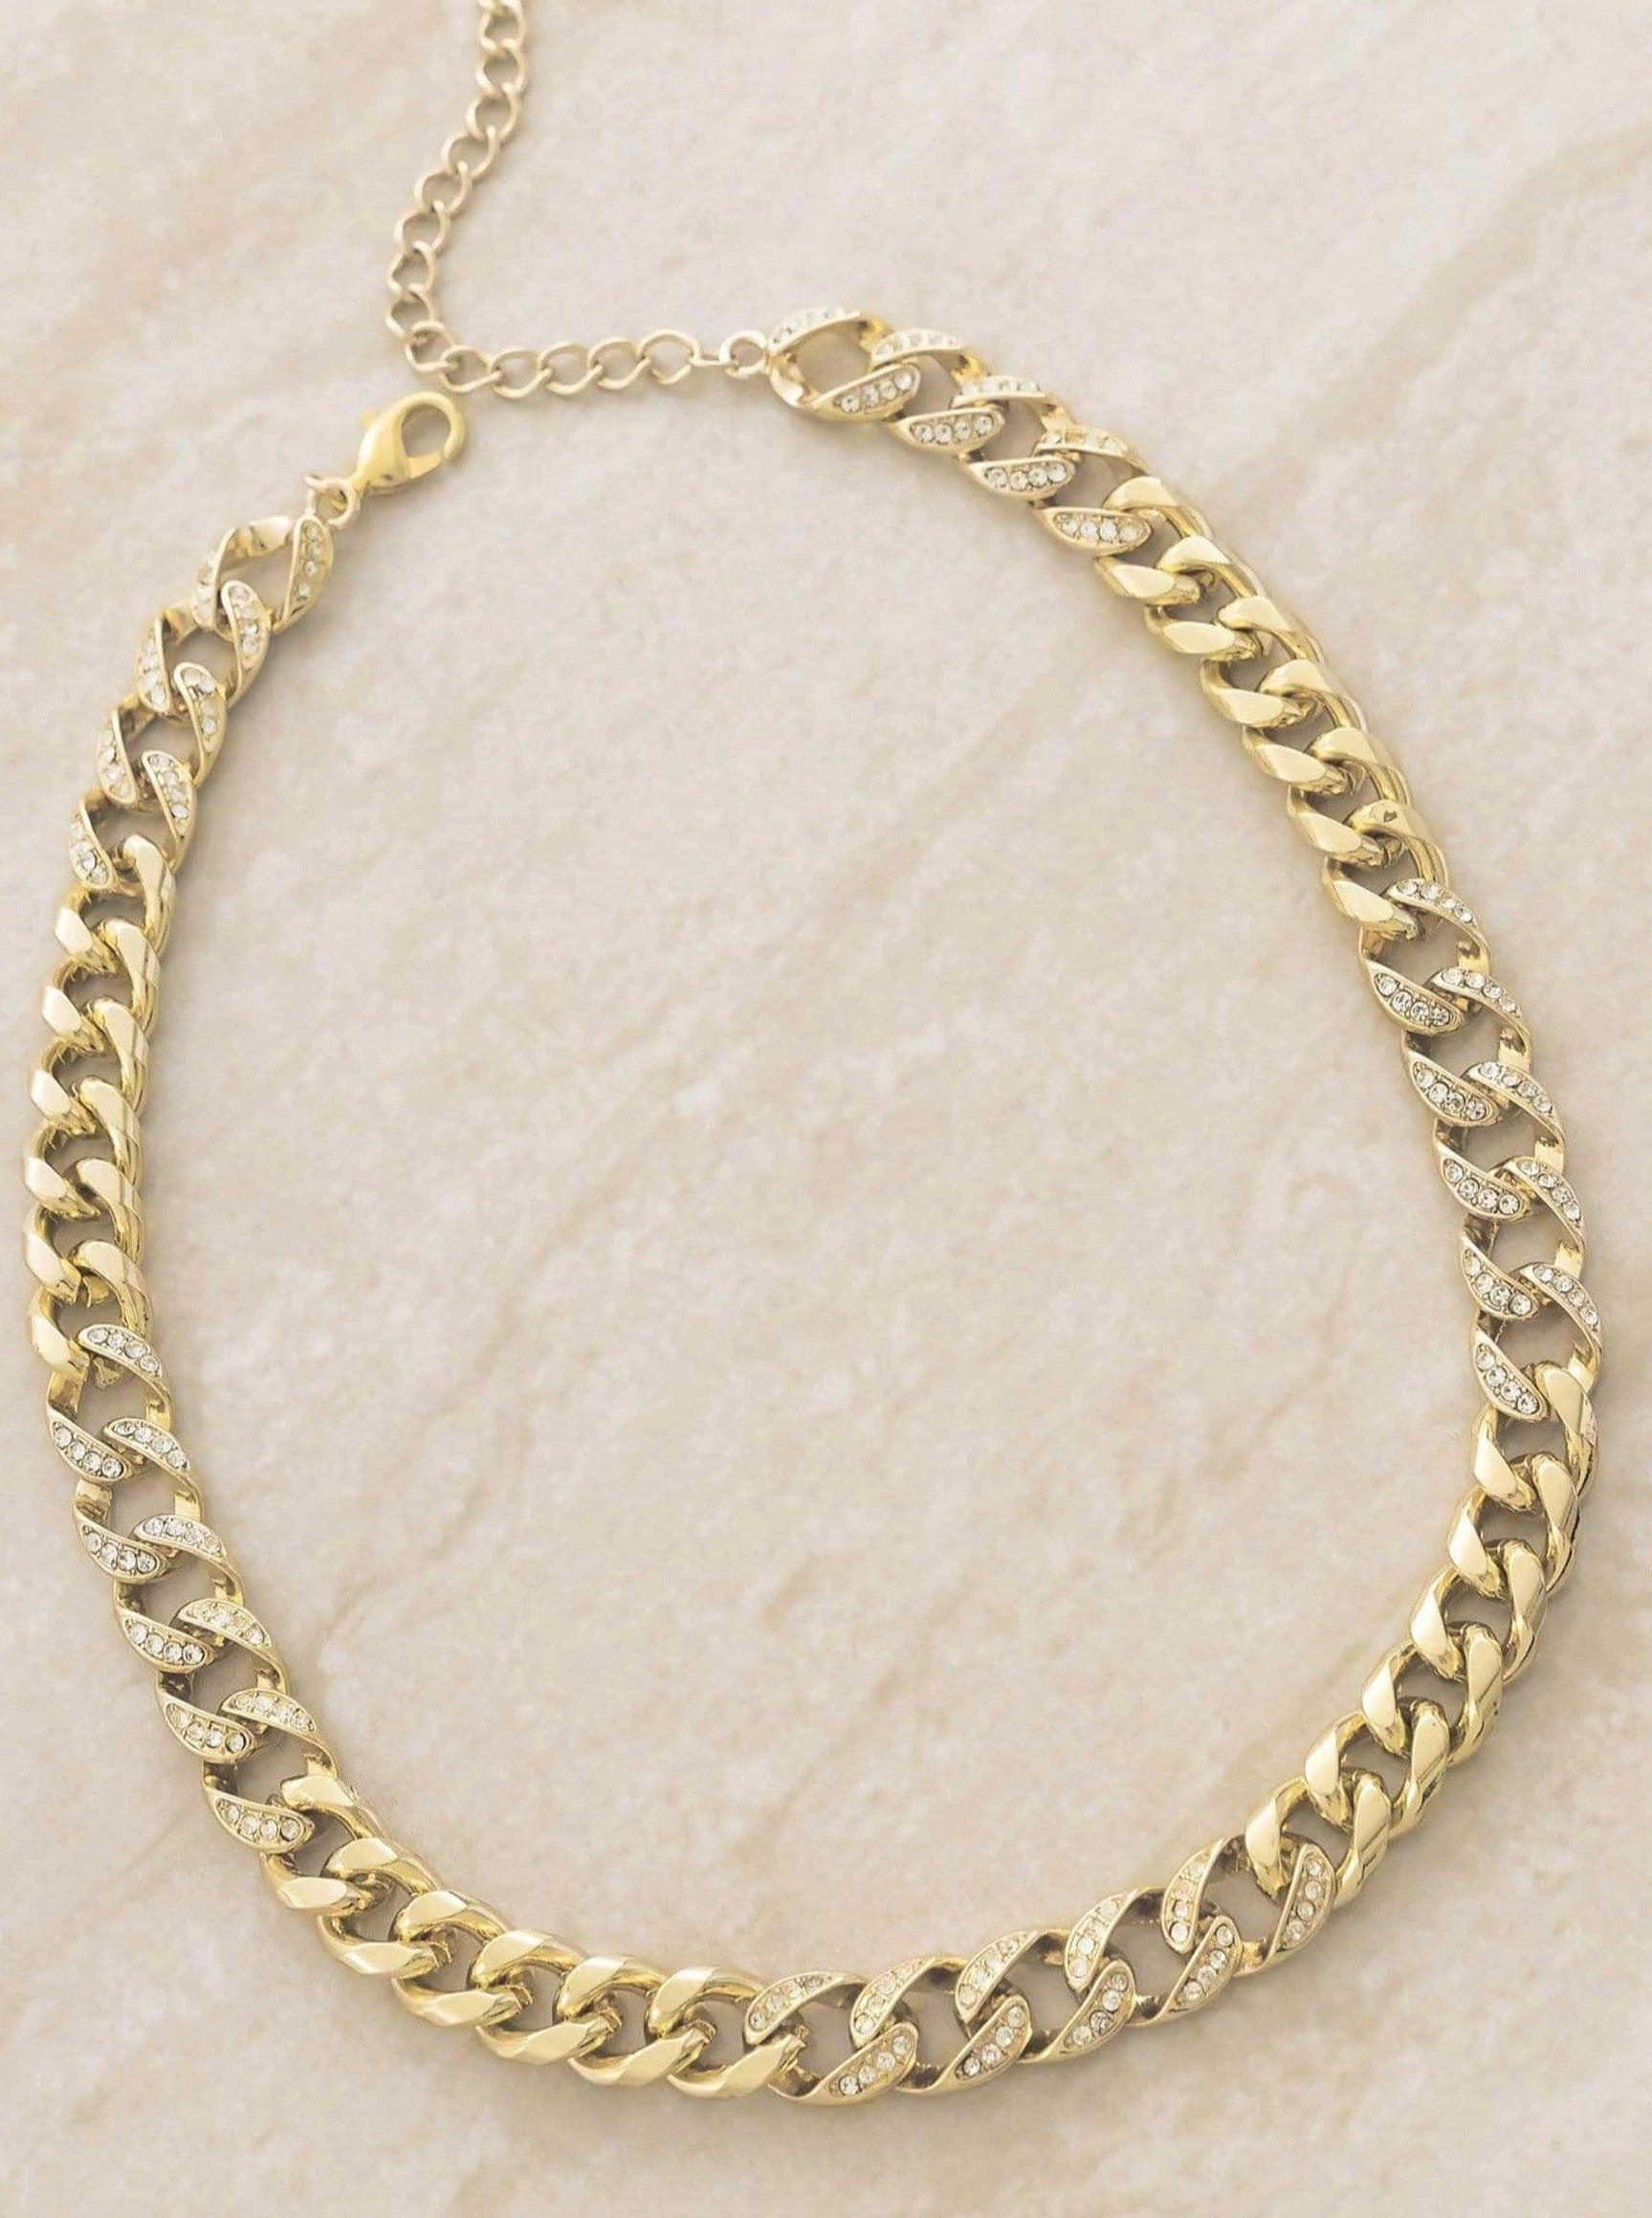 ettika necklace 18k GOLD CHAIN LINK RHINESTONE // NECKLACE